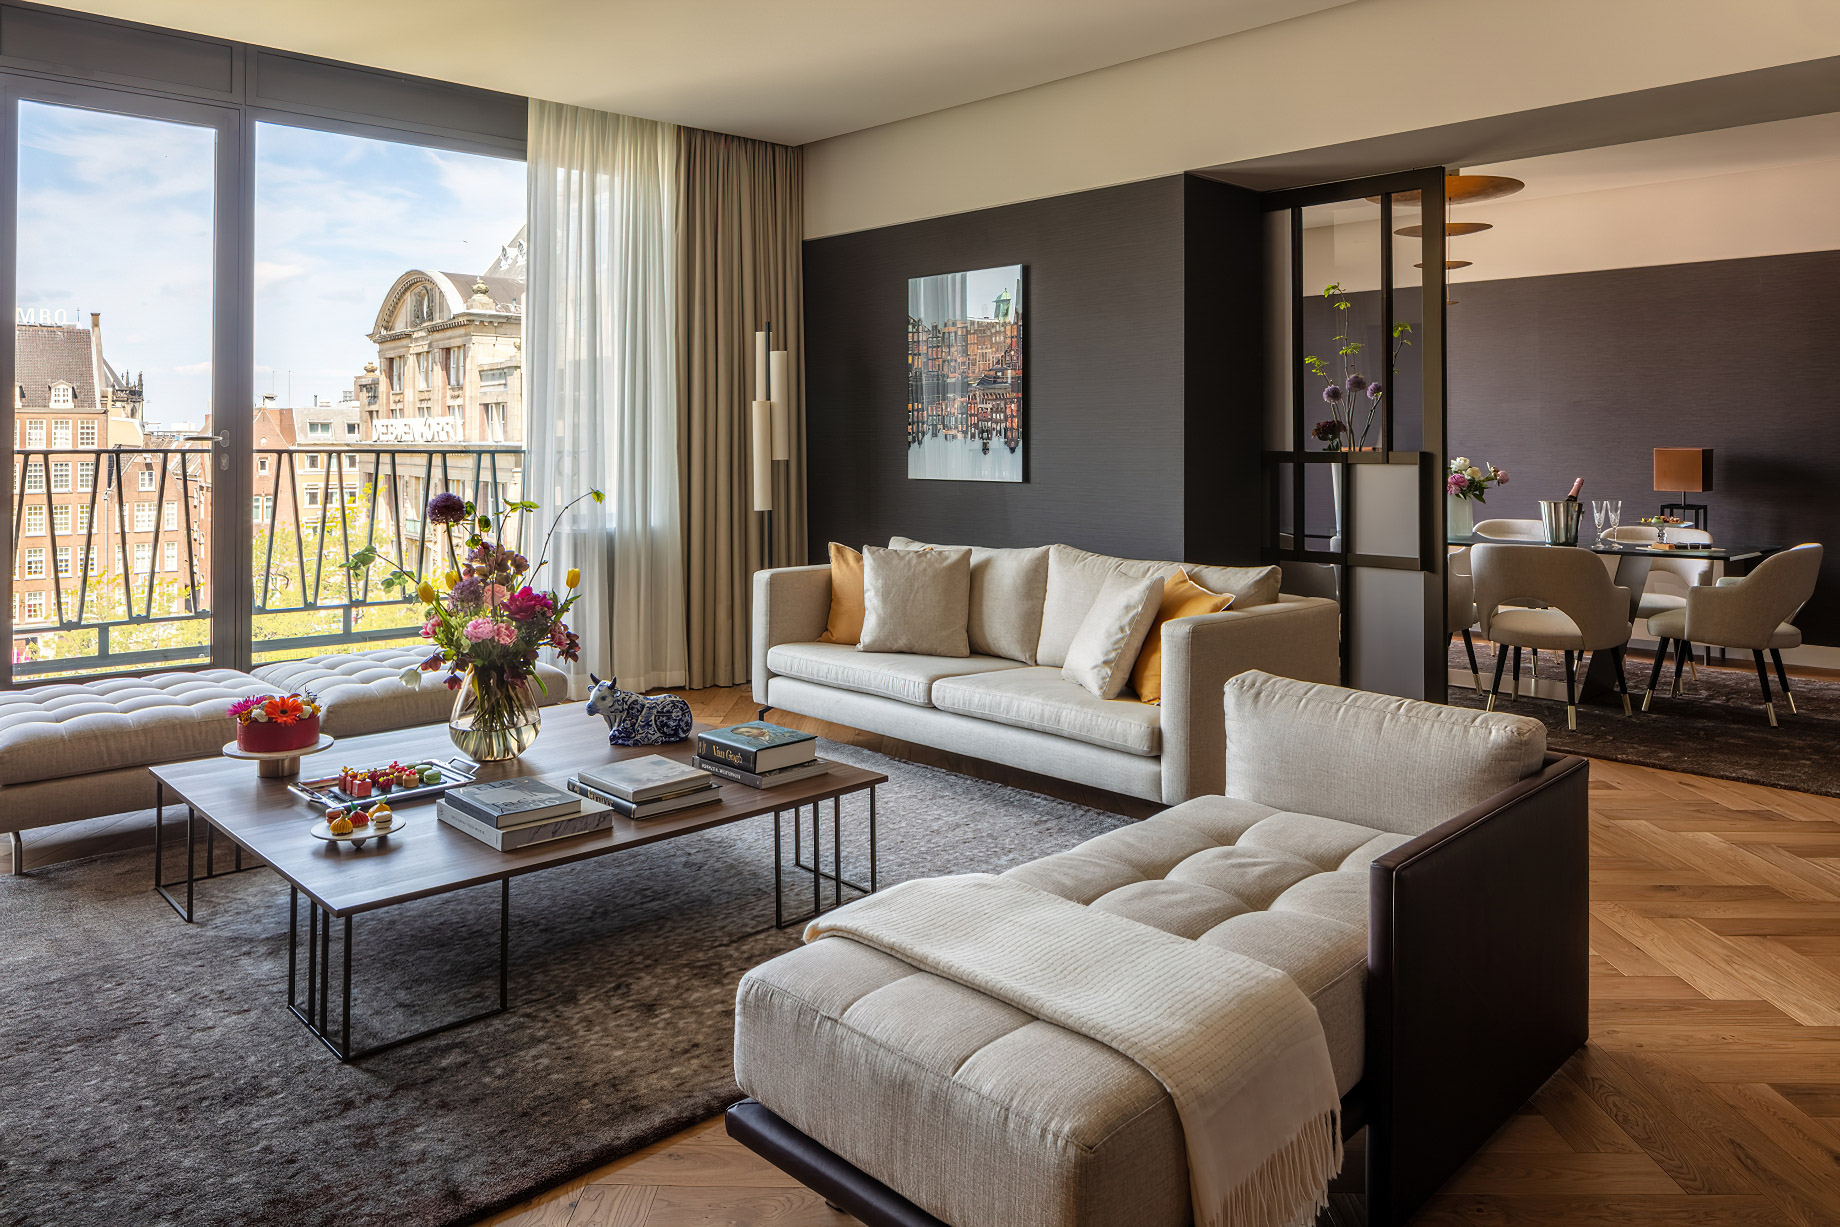 Anantara Grand Hotel Krasnapolsky Amsterdam – Netherlands – Royal Suite